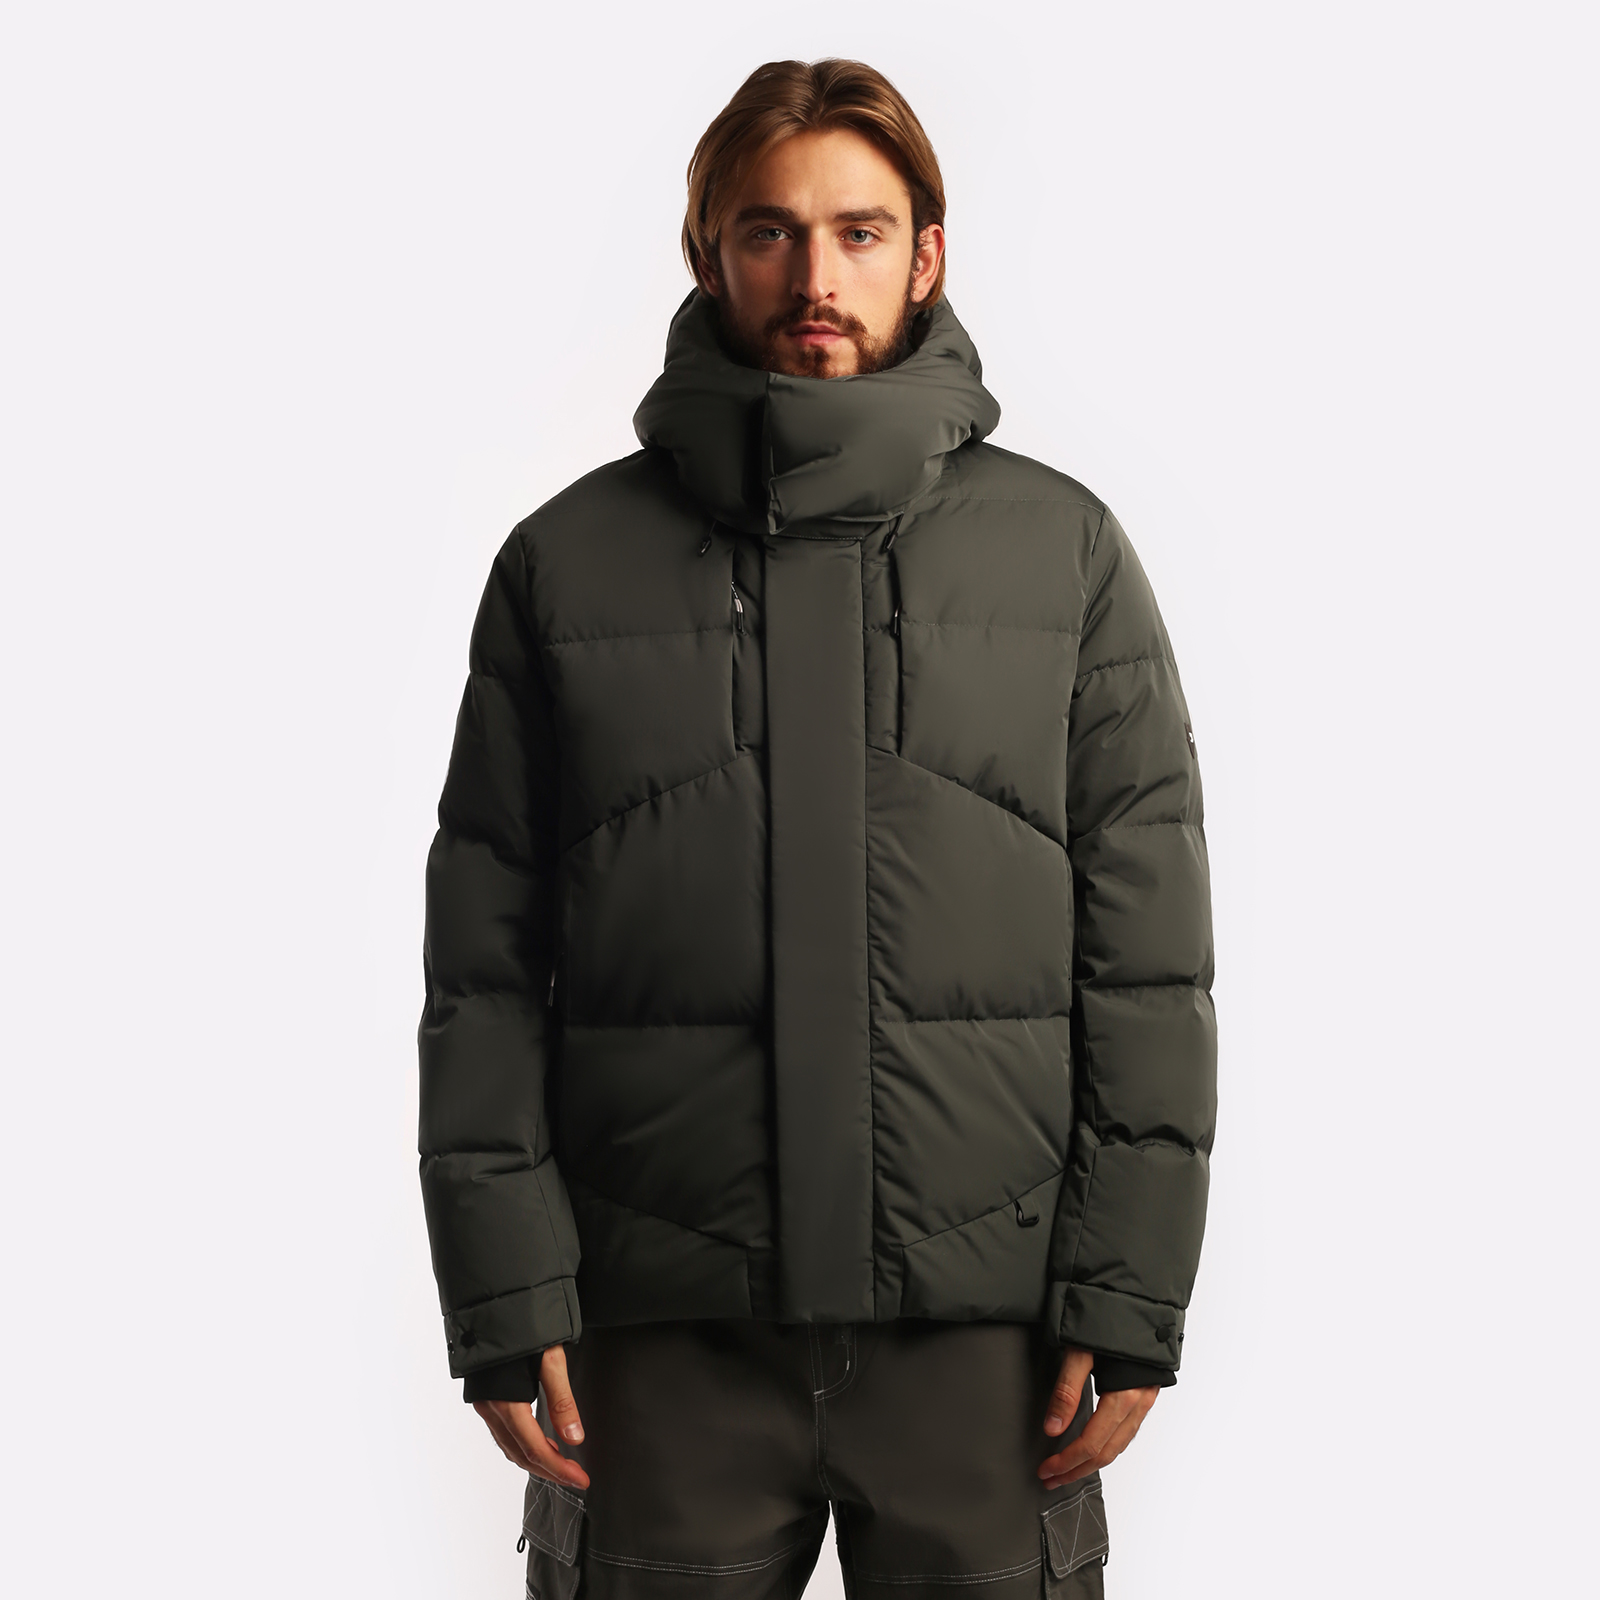 мужская куртка KRAKATAU Aitken   (Qm440-52 ел-серый)  - цена, описание, фото 1